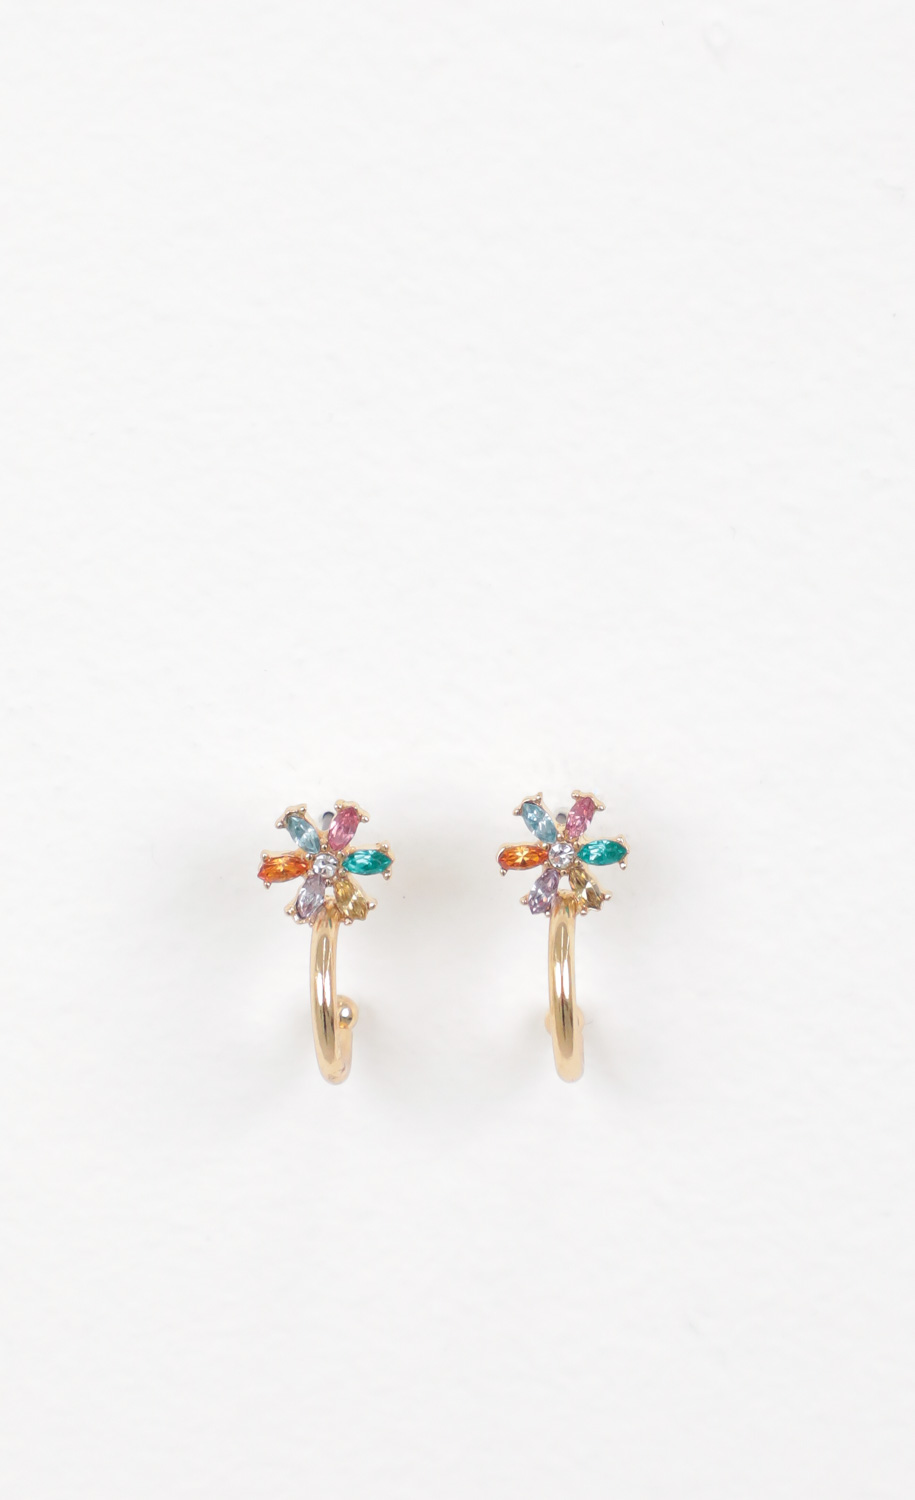 Miss Petals Mini Earrings in Gold